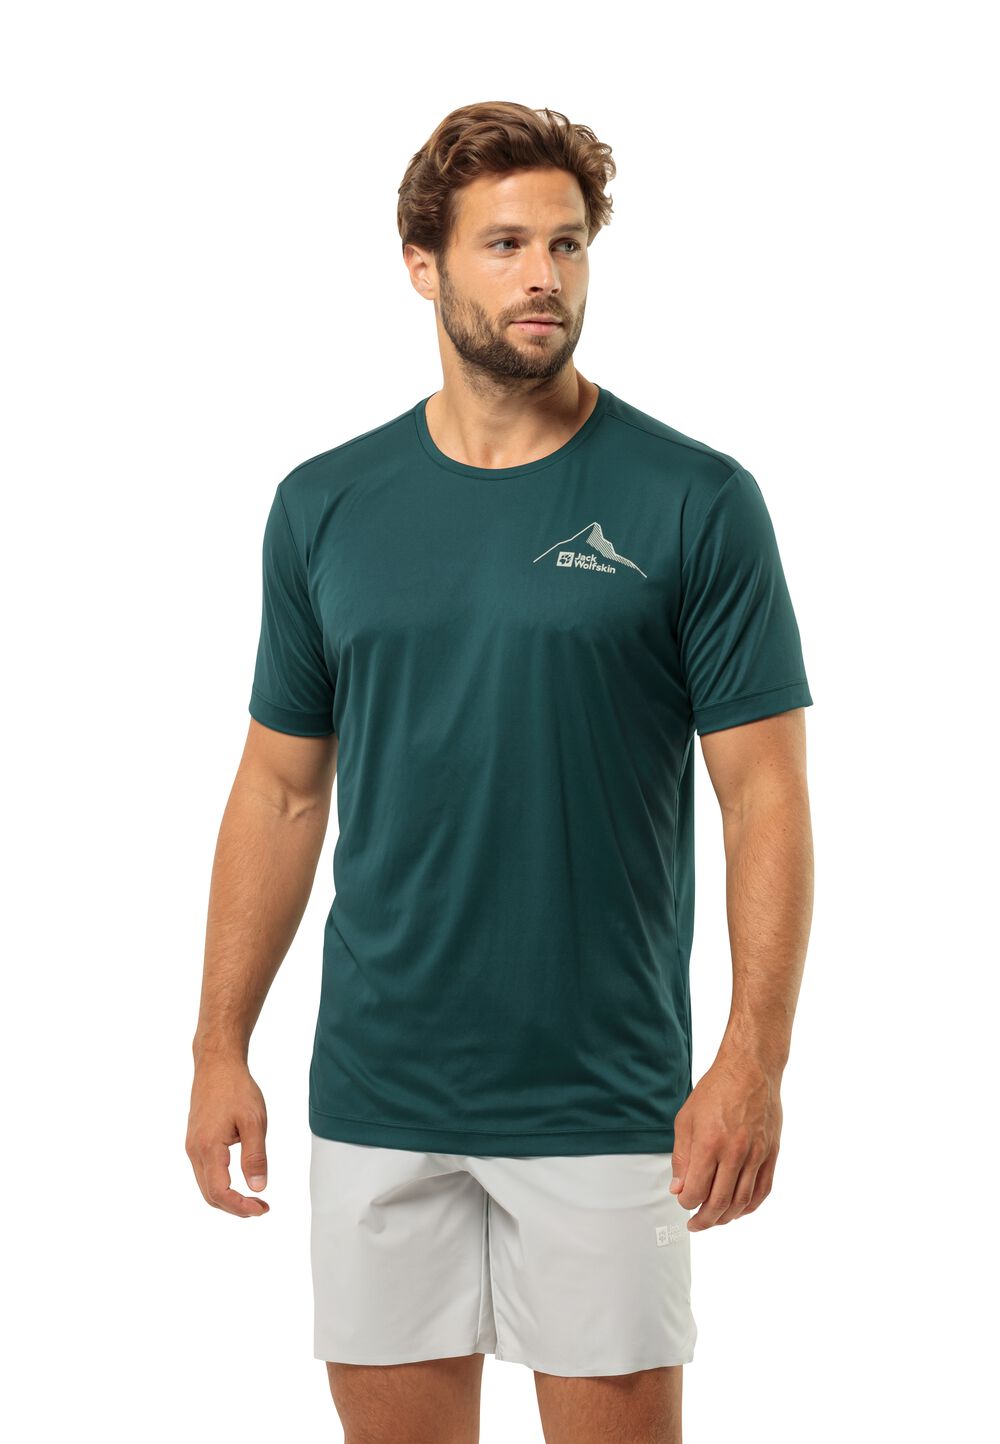 Jack Wolfskin Peak Graphic T-Shirt Men Functioneel shirt Heren XL emerald